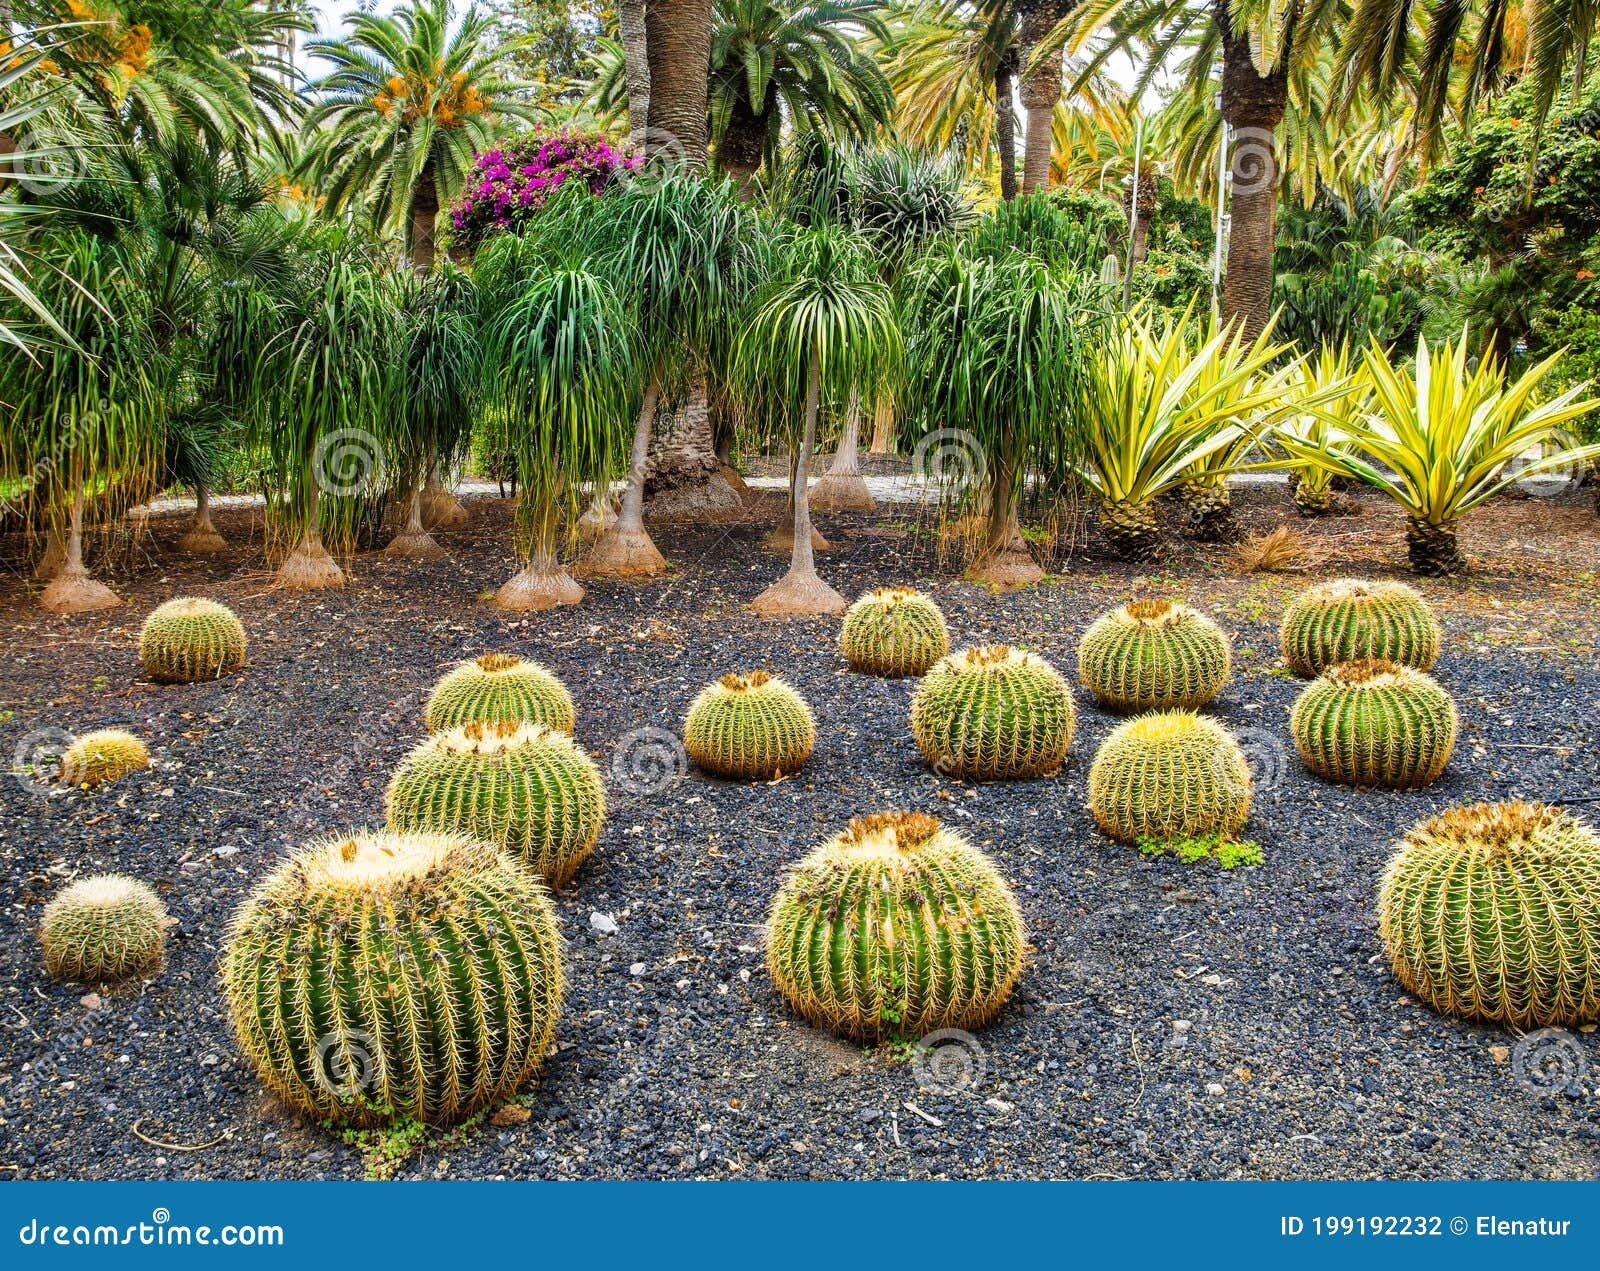 amazing view of  cactus park area in garcia sanabria park. location: cacti garden in santa cruz de tenerife, tenerife, canary